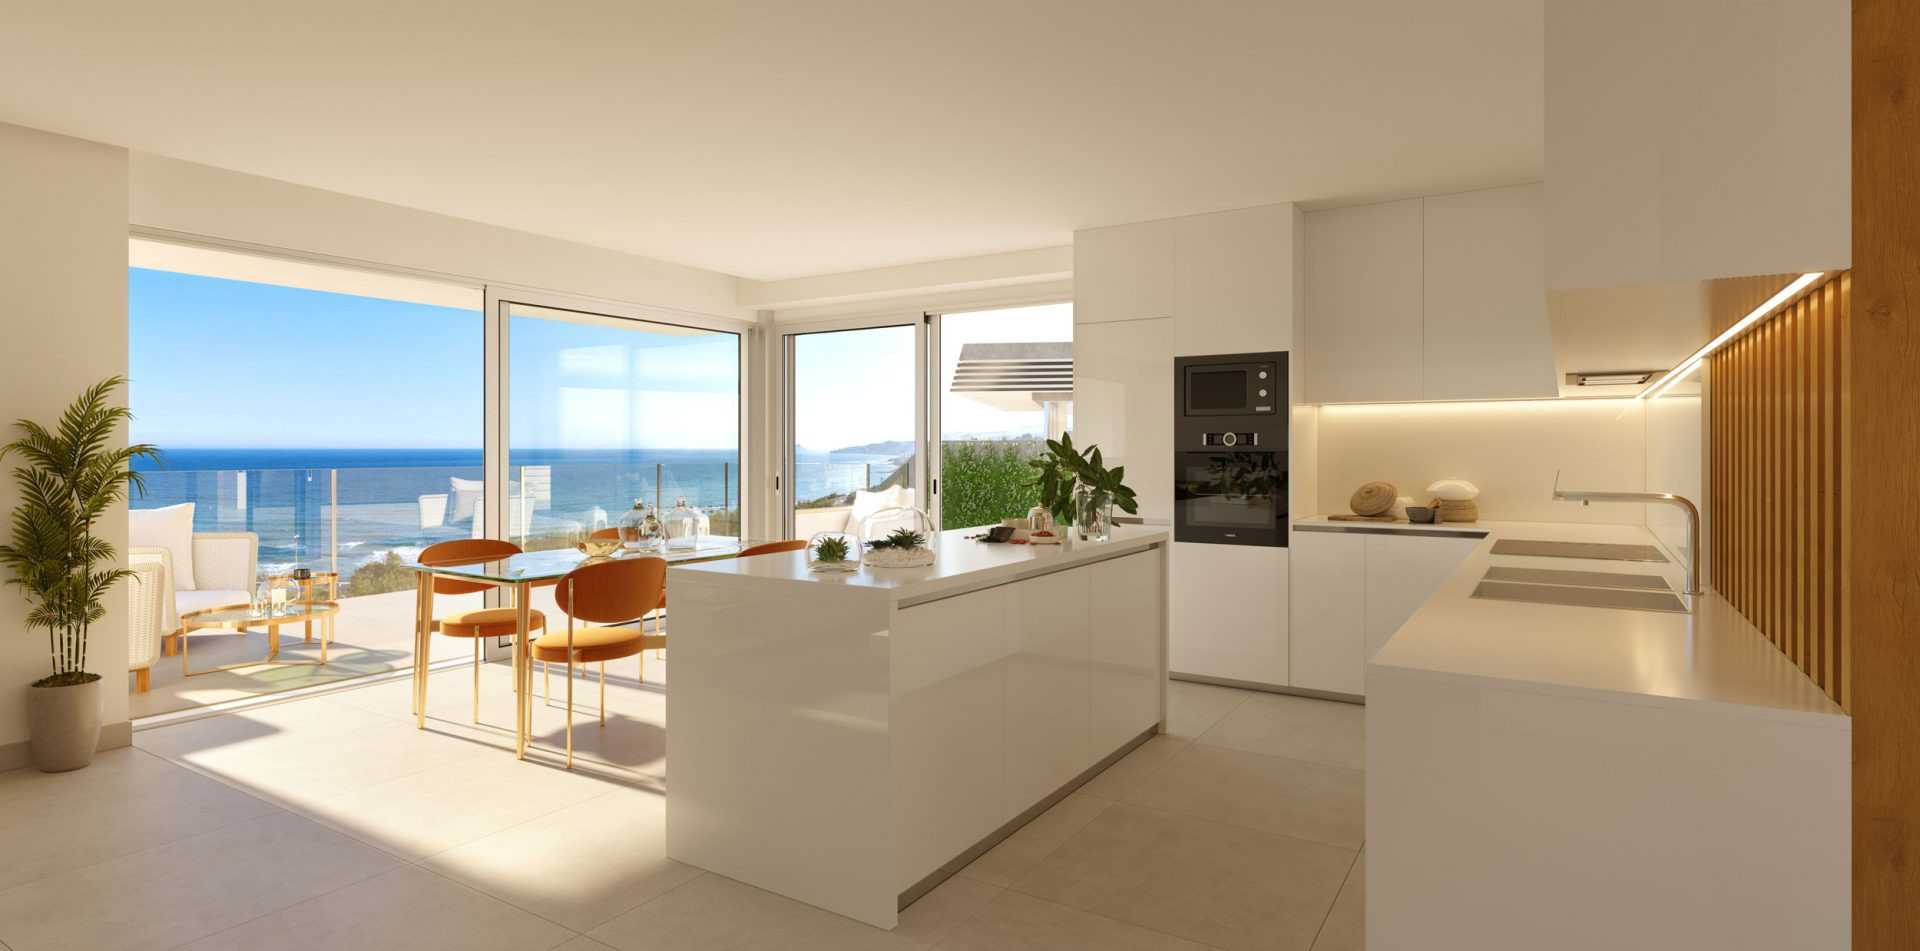 Exclusive 4 bedroom semi-detached with avant-garde design and stunning sea views in Mijas Costa. | Image 10